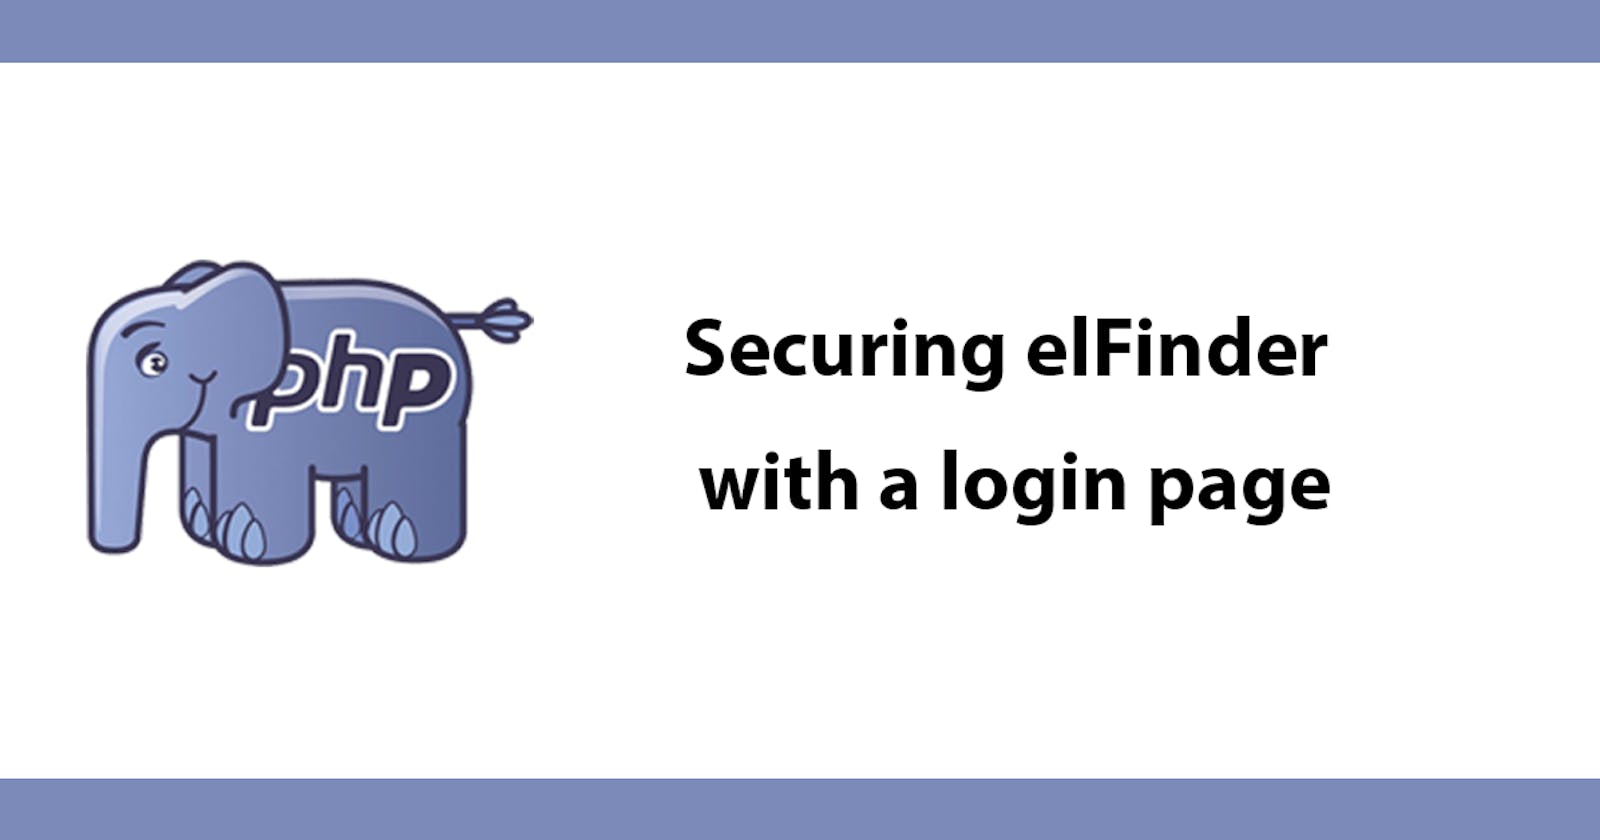 Securing elFinder with a login page